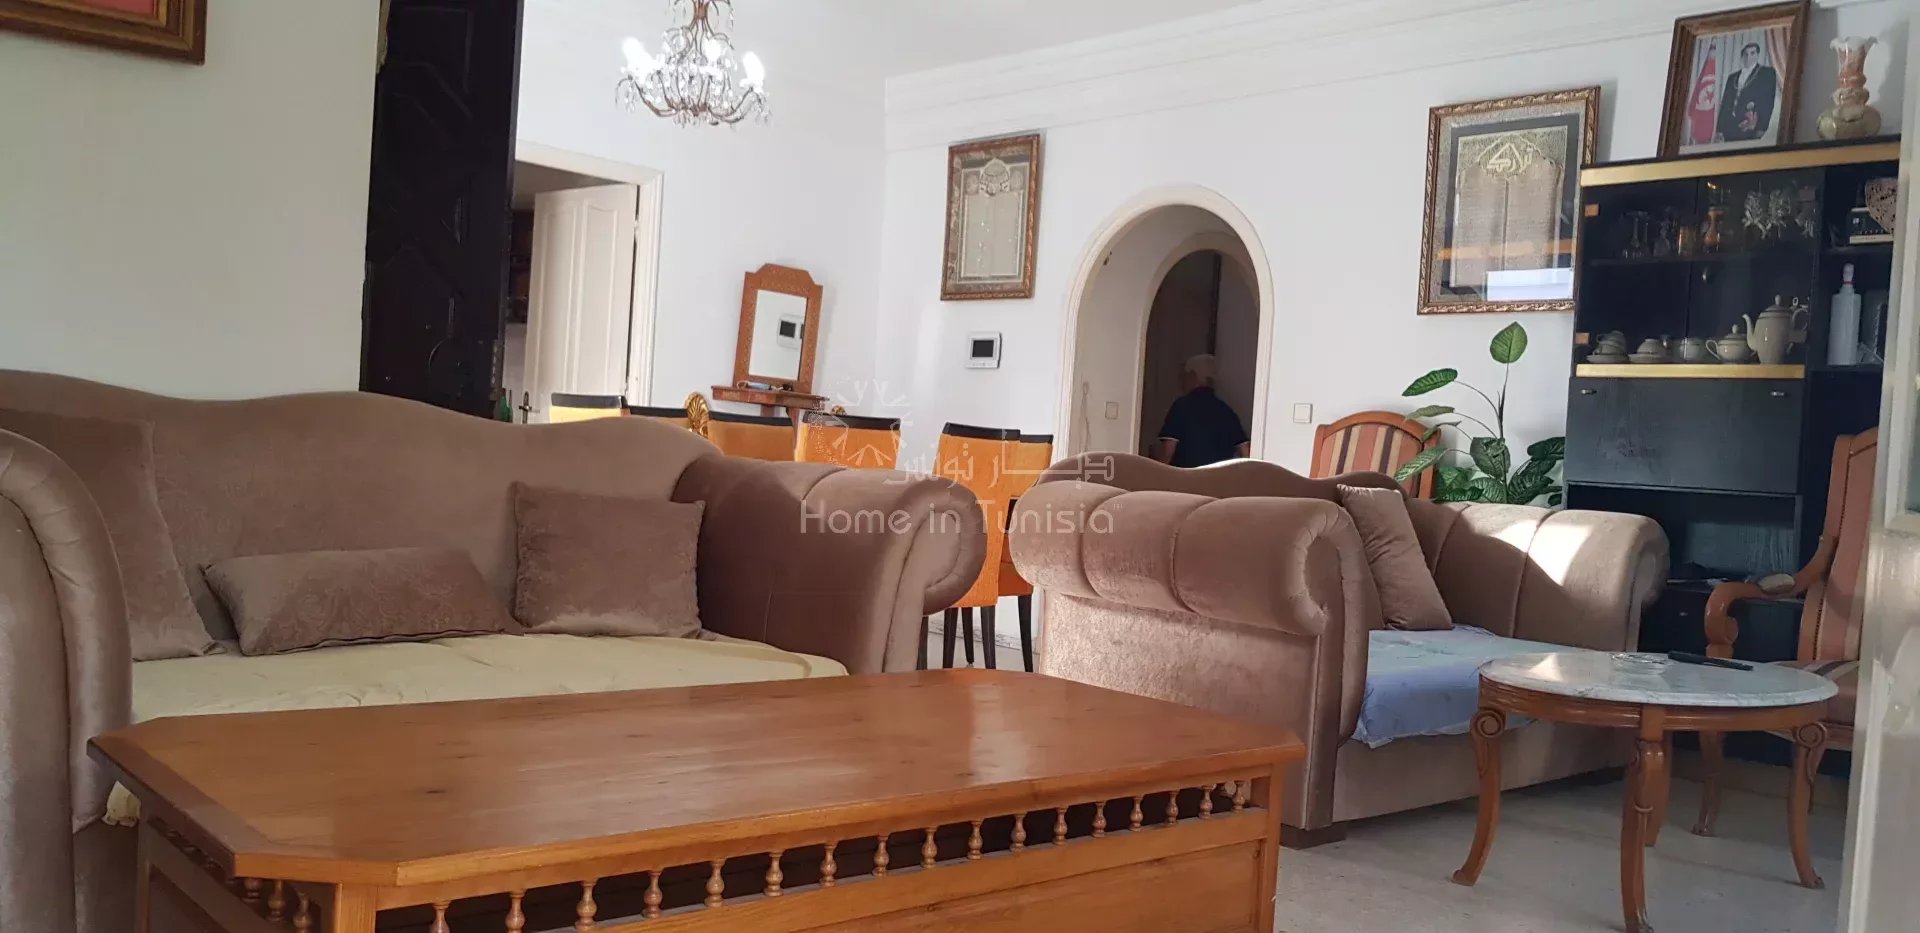 Villa a vendre a khezama ouest